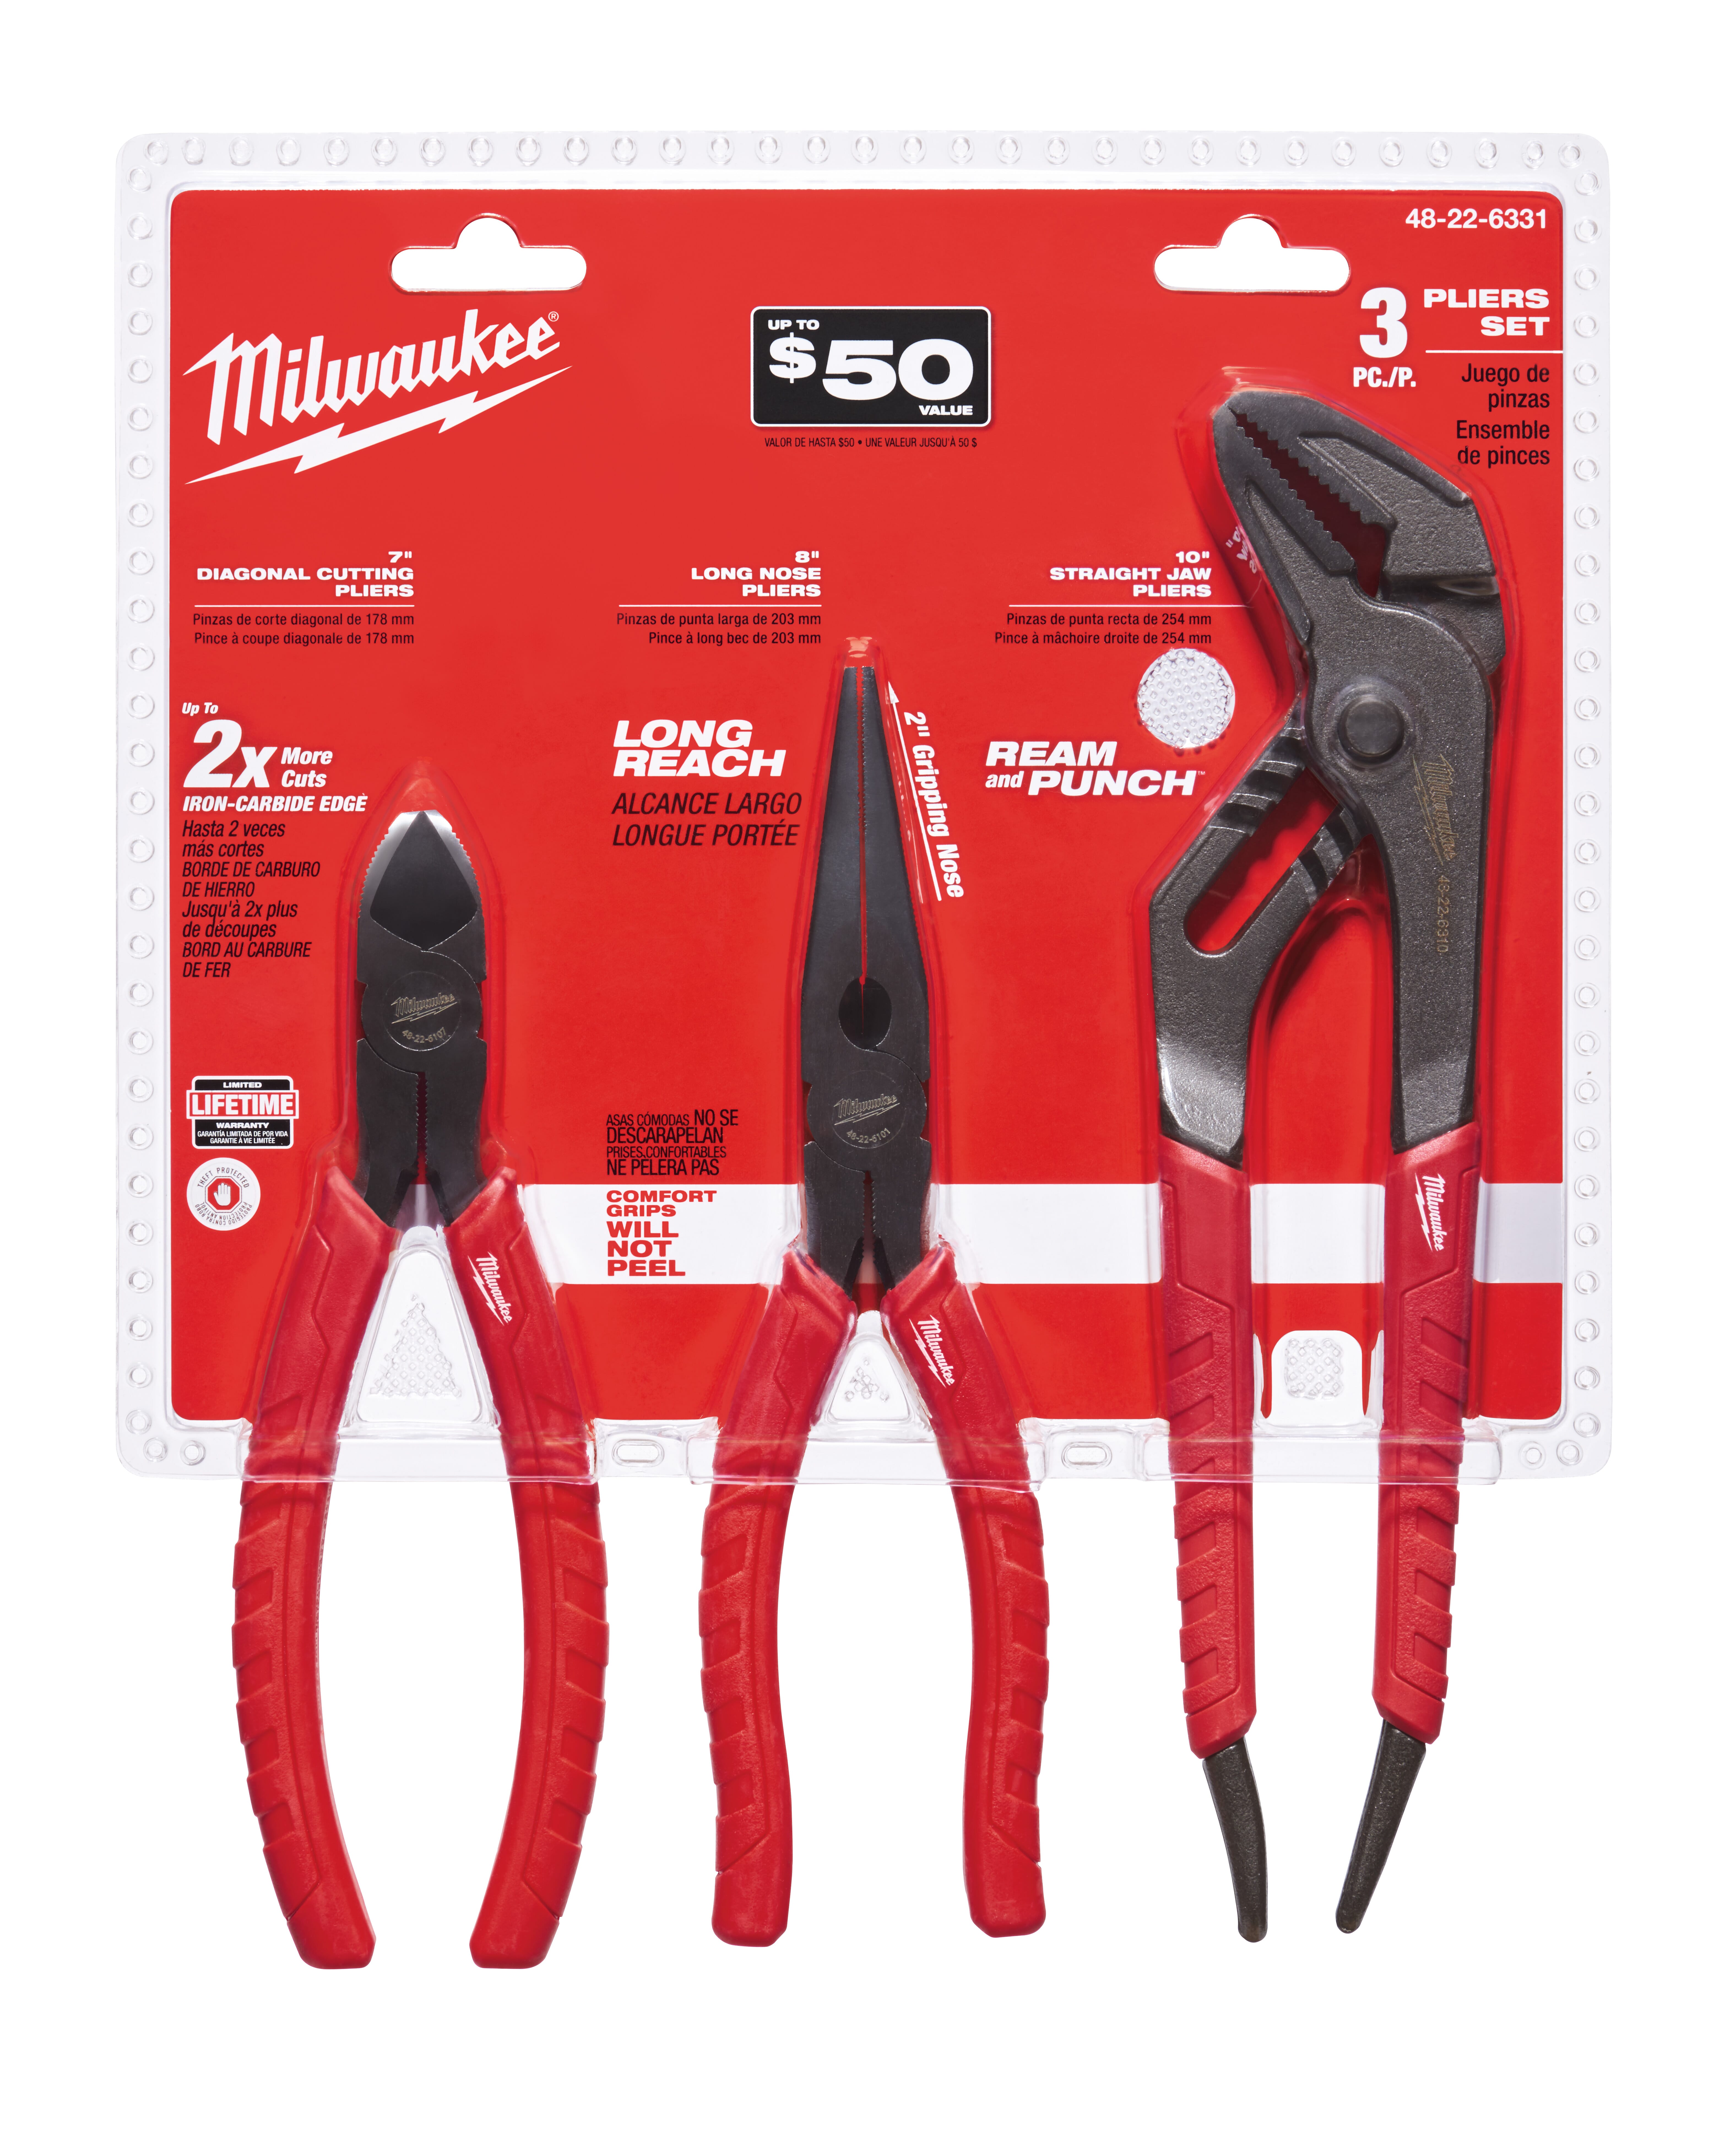 Milwaukee® 48-22-6331 Plier Kit With Fixed Pocket, 3 Pieces